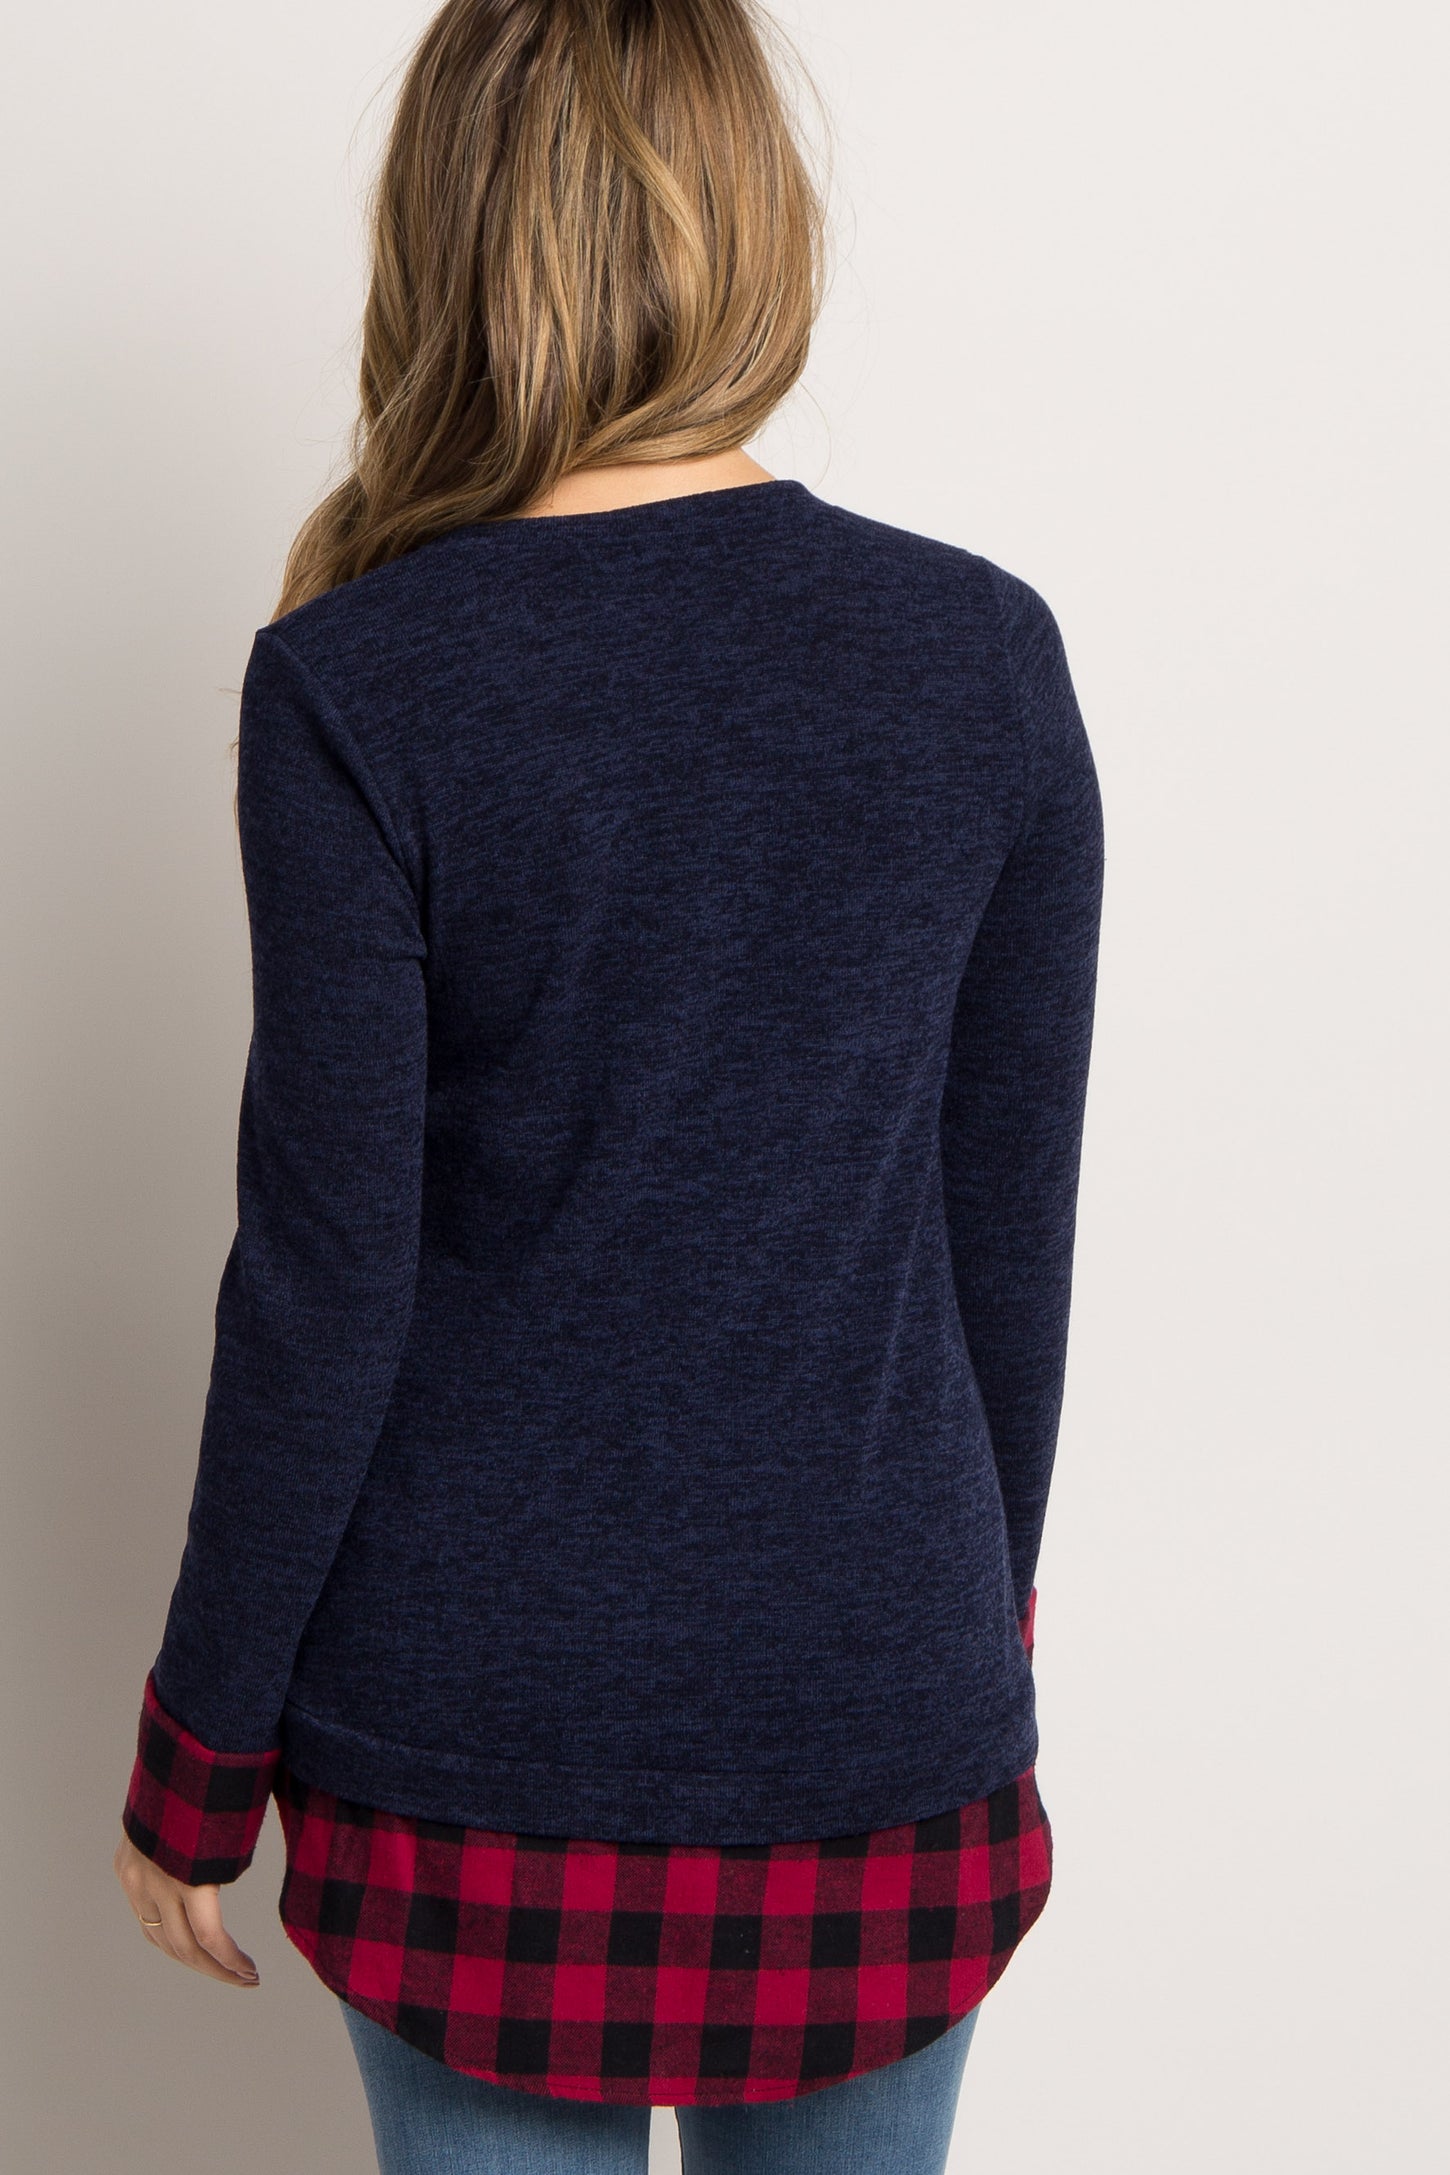 Navy Plaid Shirttail Maternity Sweater